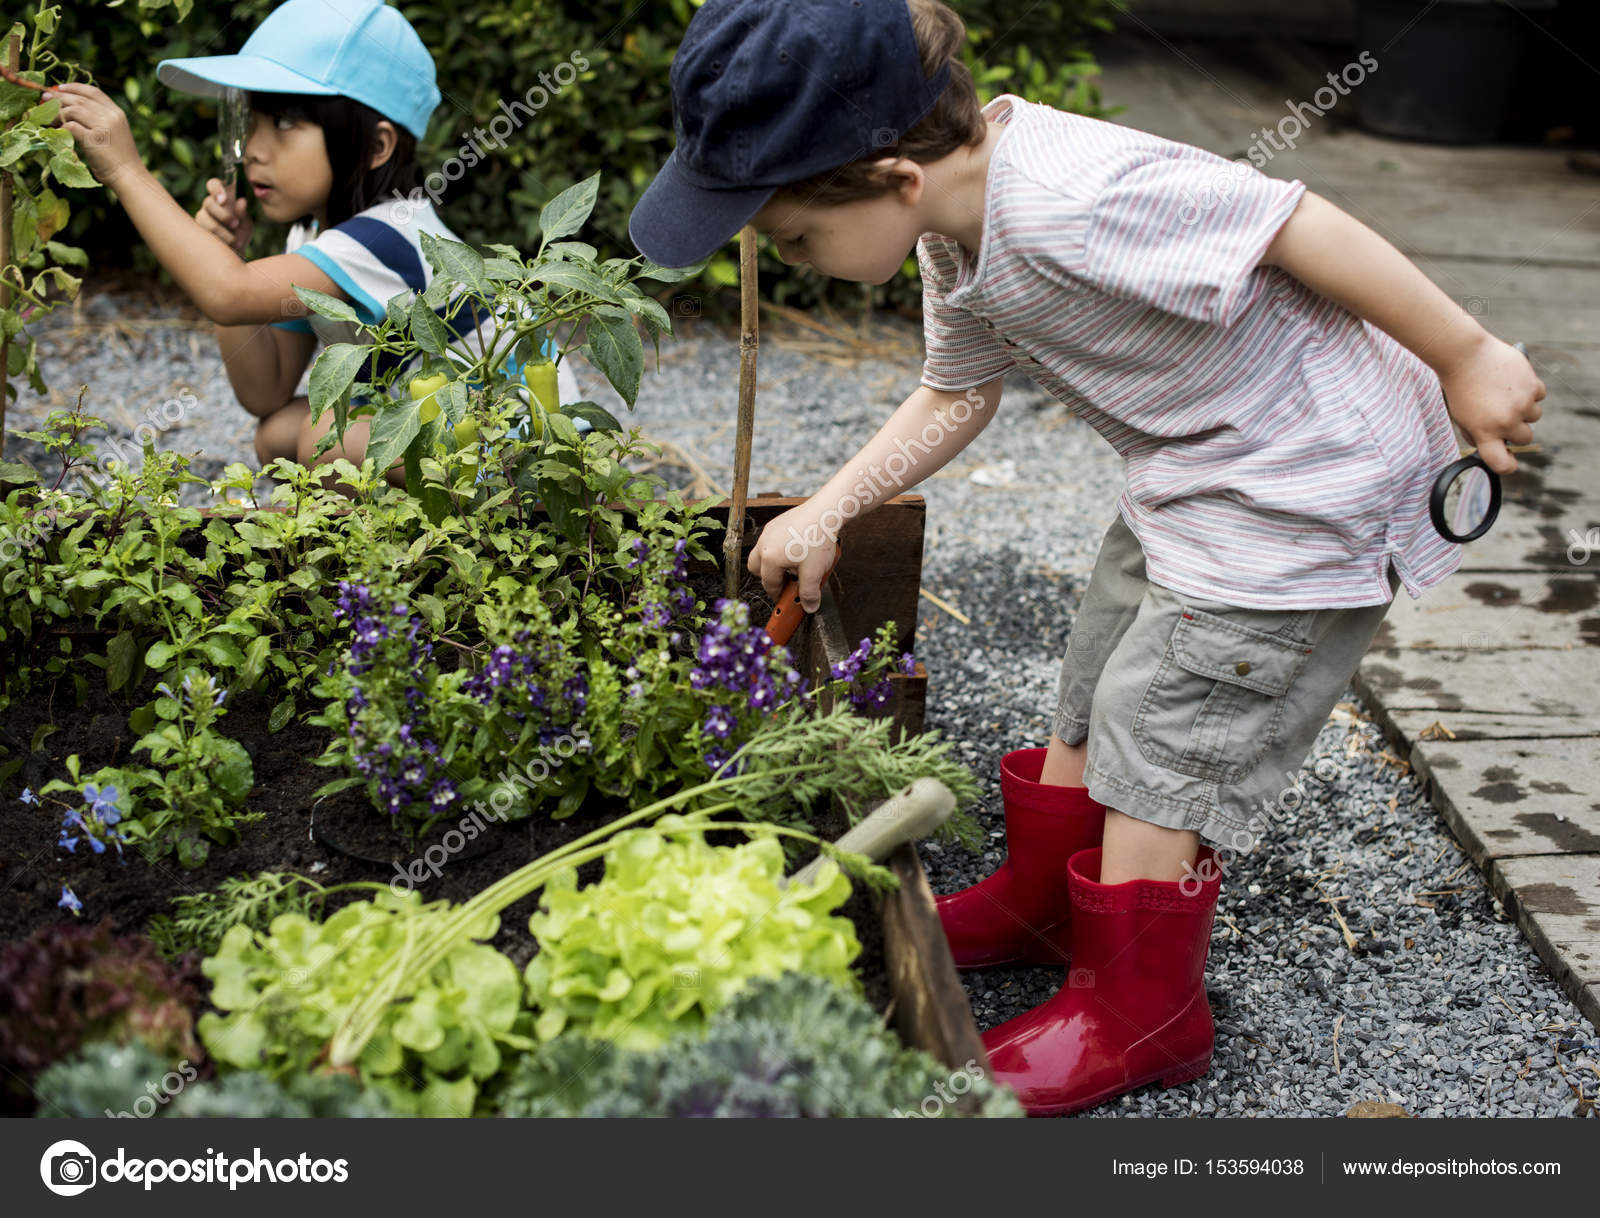 Kids in the Garden